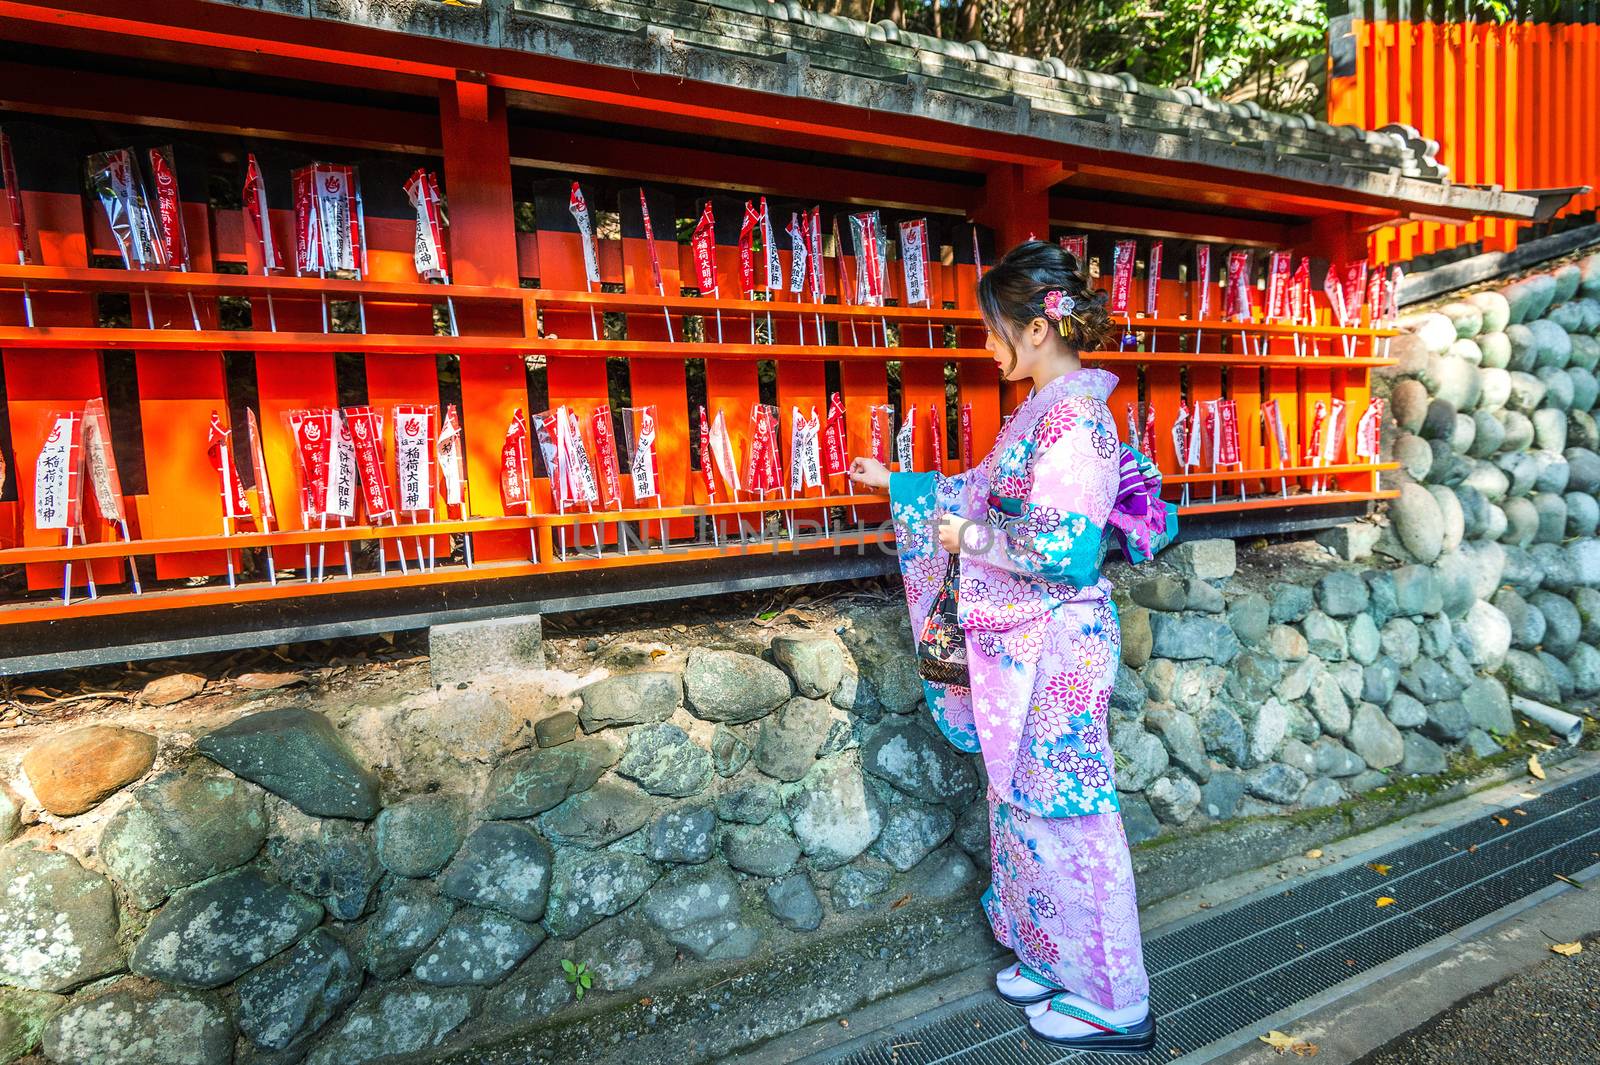 Asian women wearing japanese traditional kimono visiting the beautiful in Fushimi Inari Shrine in Kyoto, Japan by gutarphotoghaphy